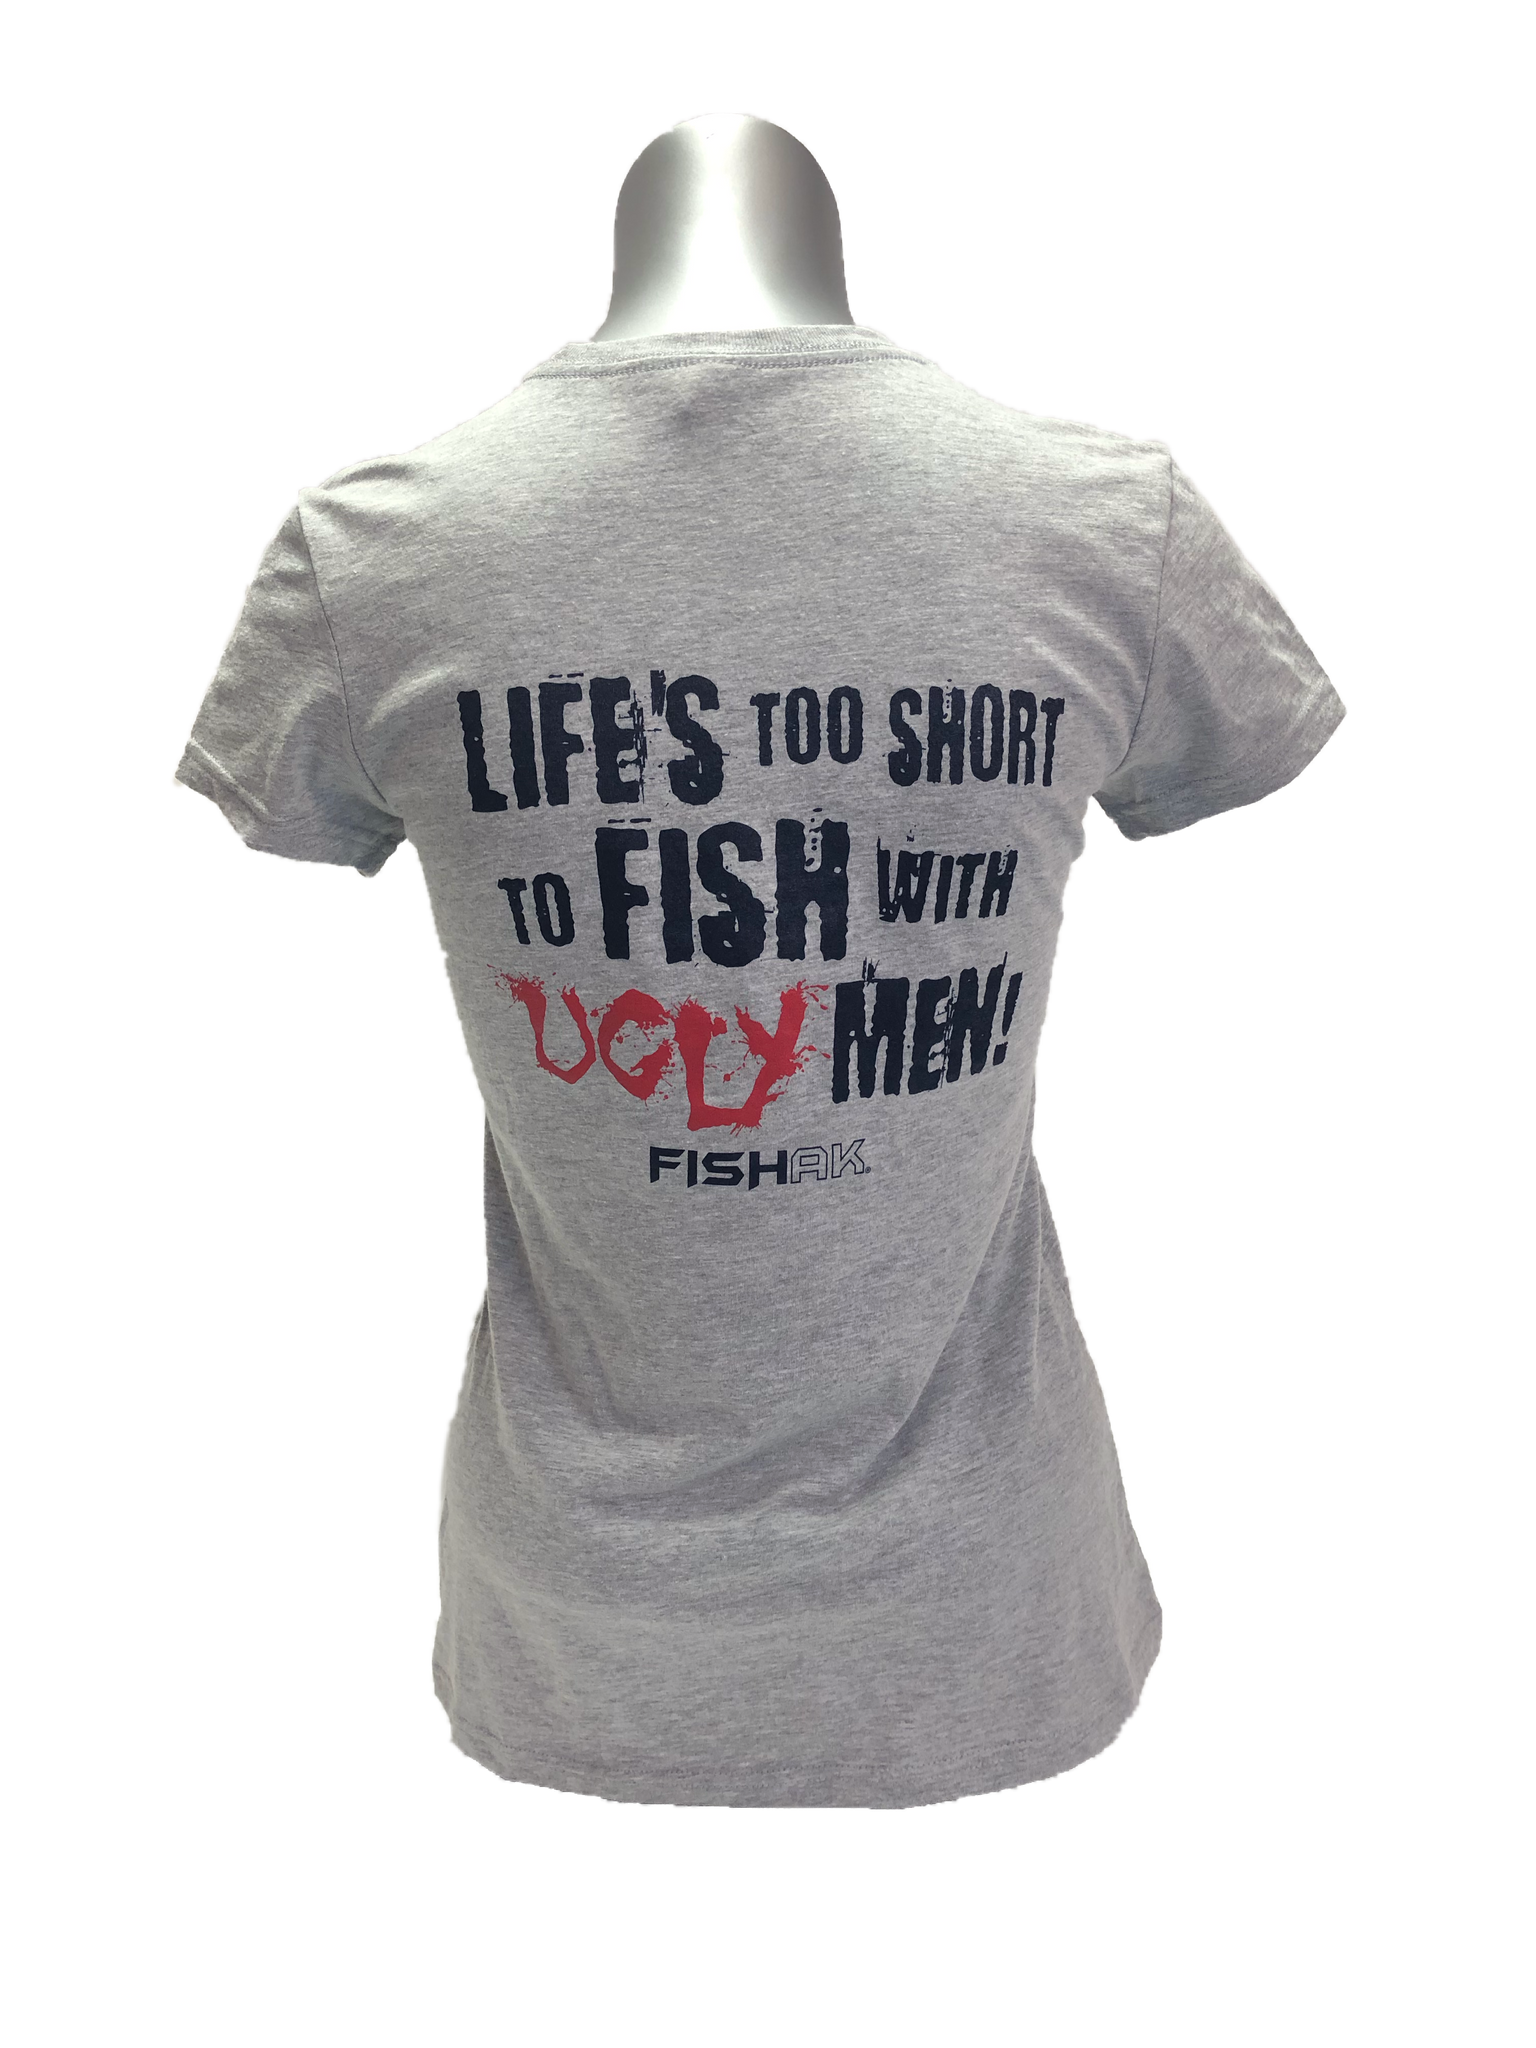 FISH AK Ugly Men - Ladies Fitted T-Shirt – Alaska Spiritwear, LLC - FishAK